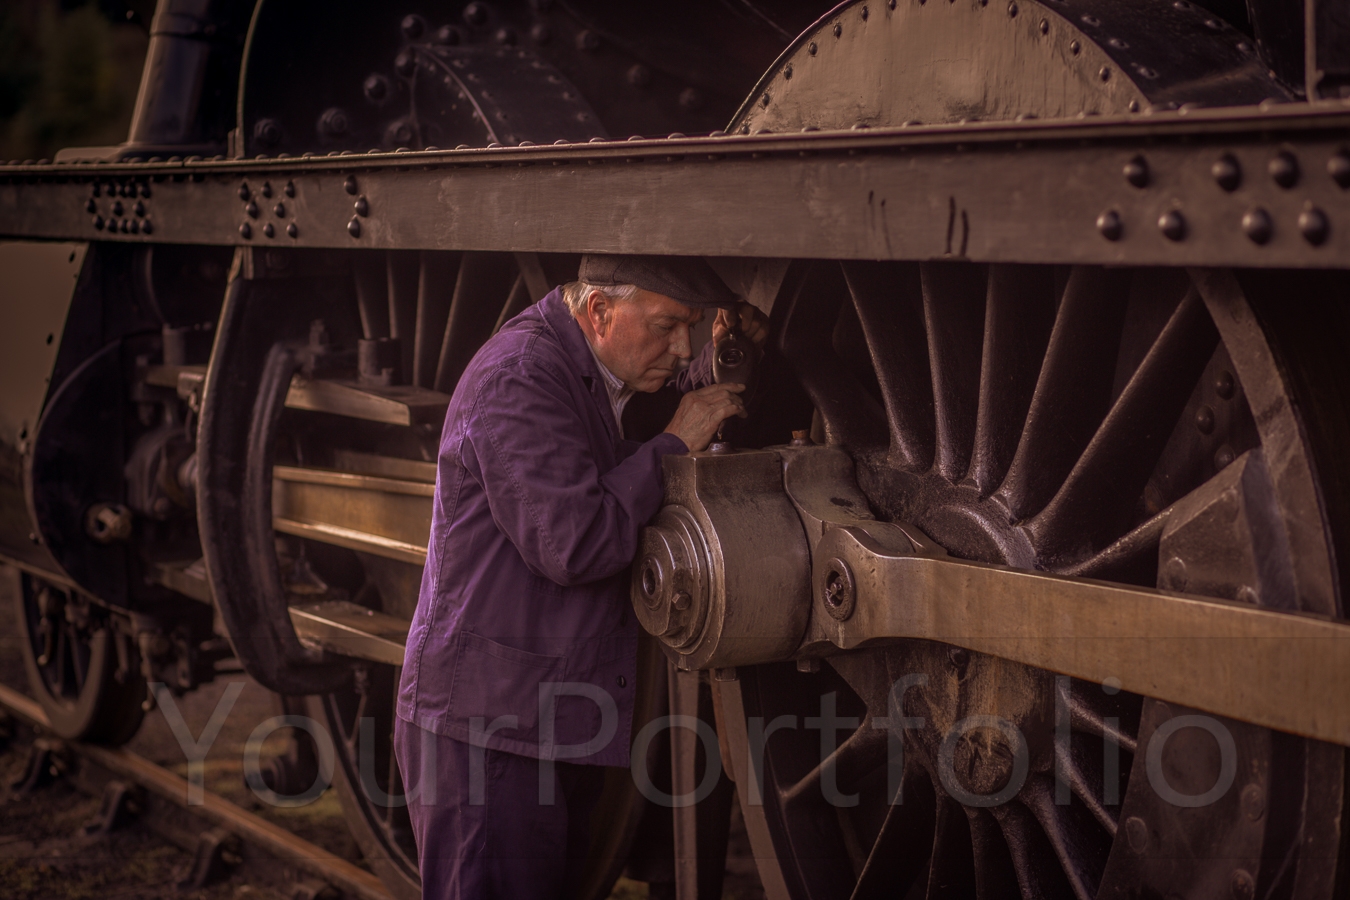 photographer Dafydd performance  photo taken at Didcot railway museum